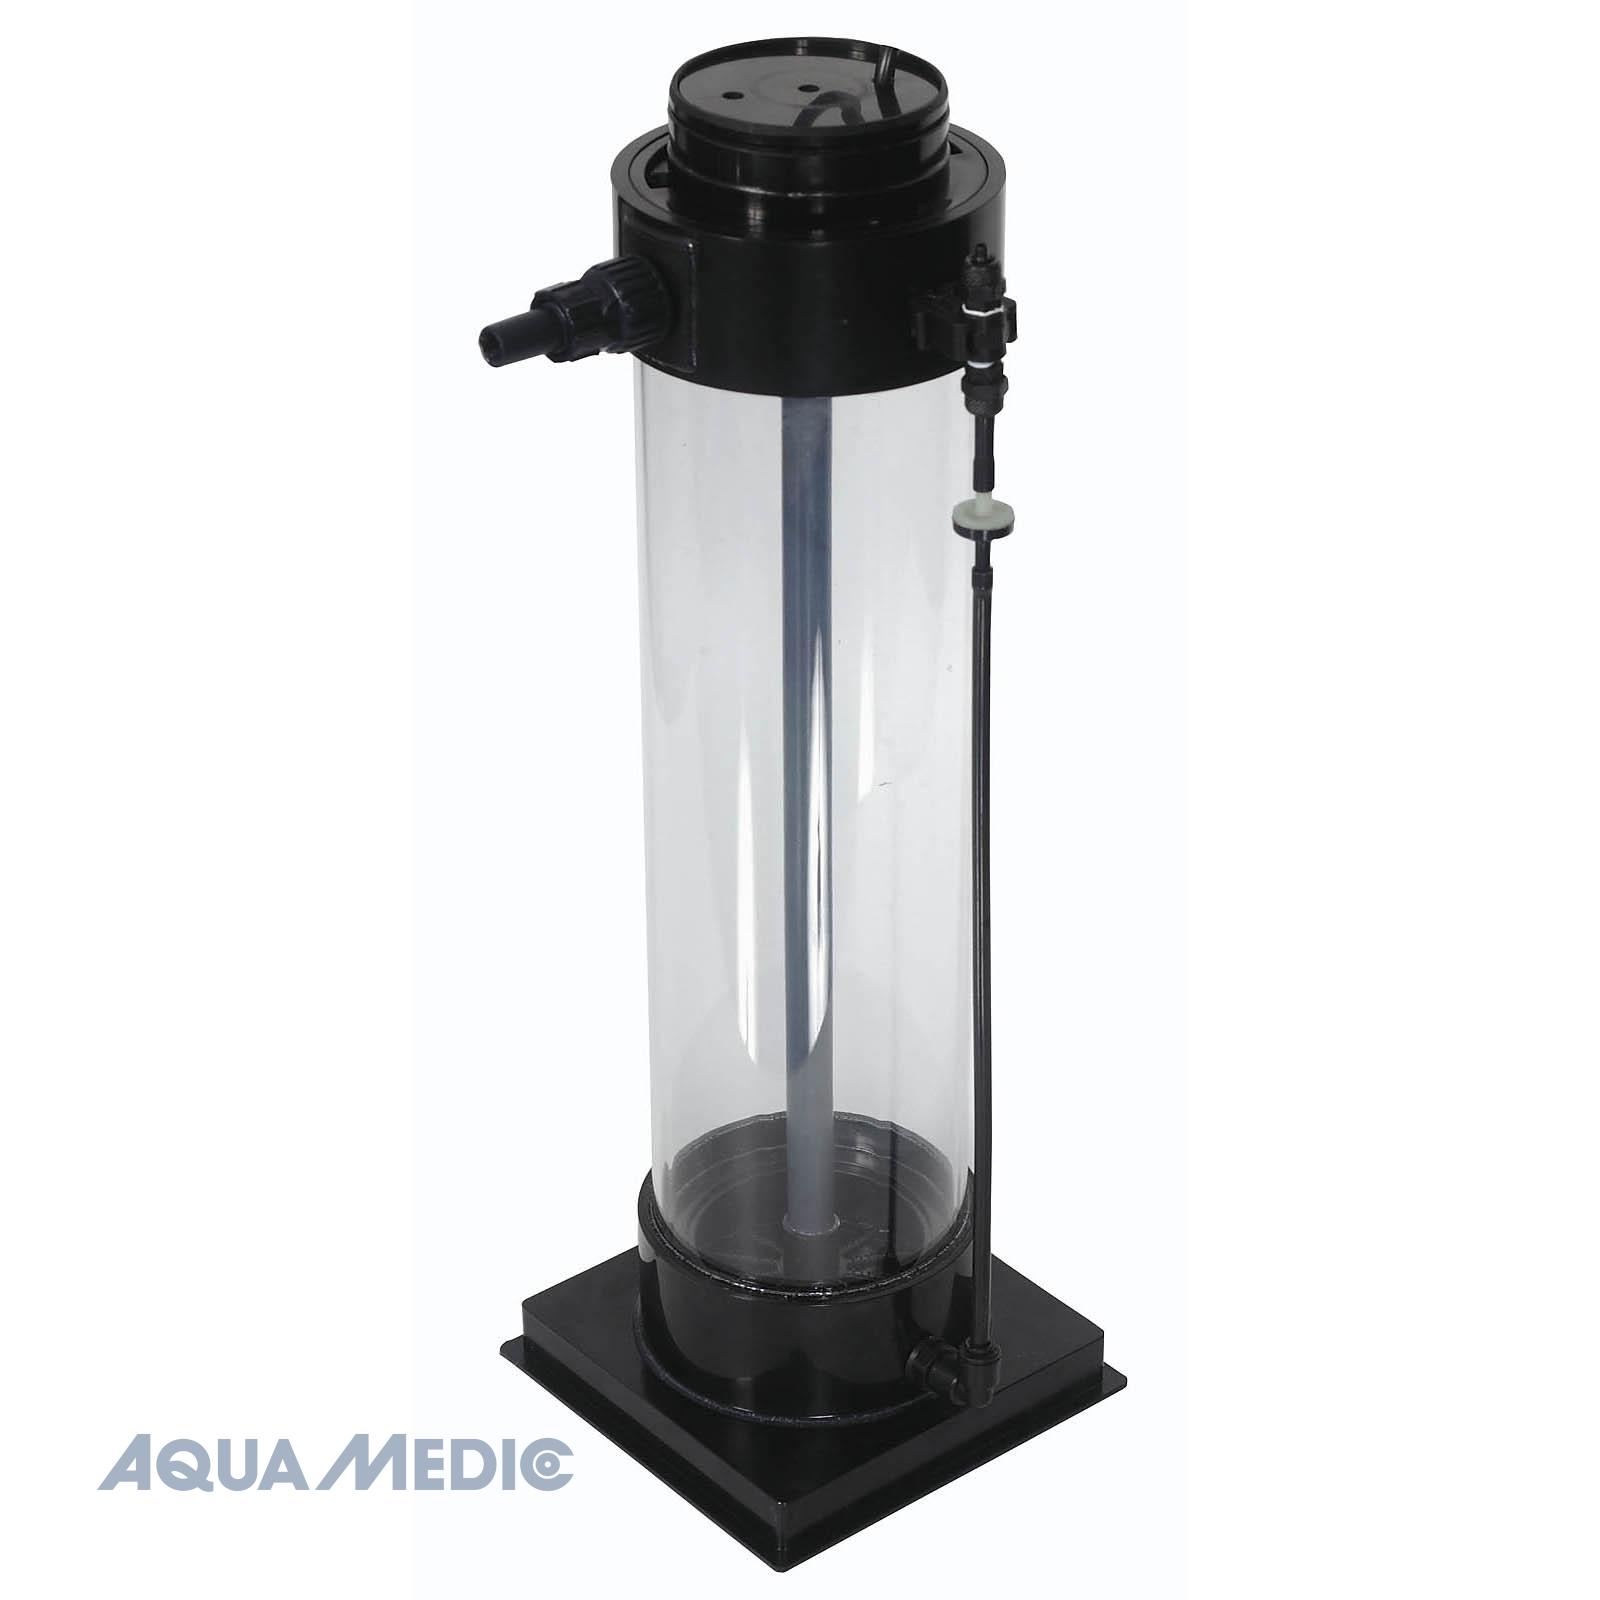 Aqua Medic kalkwasser stirrer KS 1000